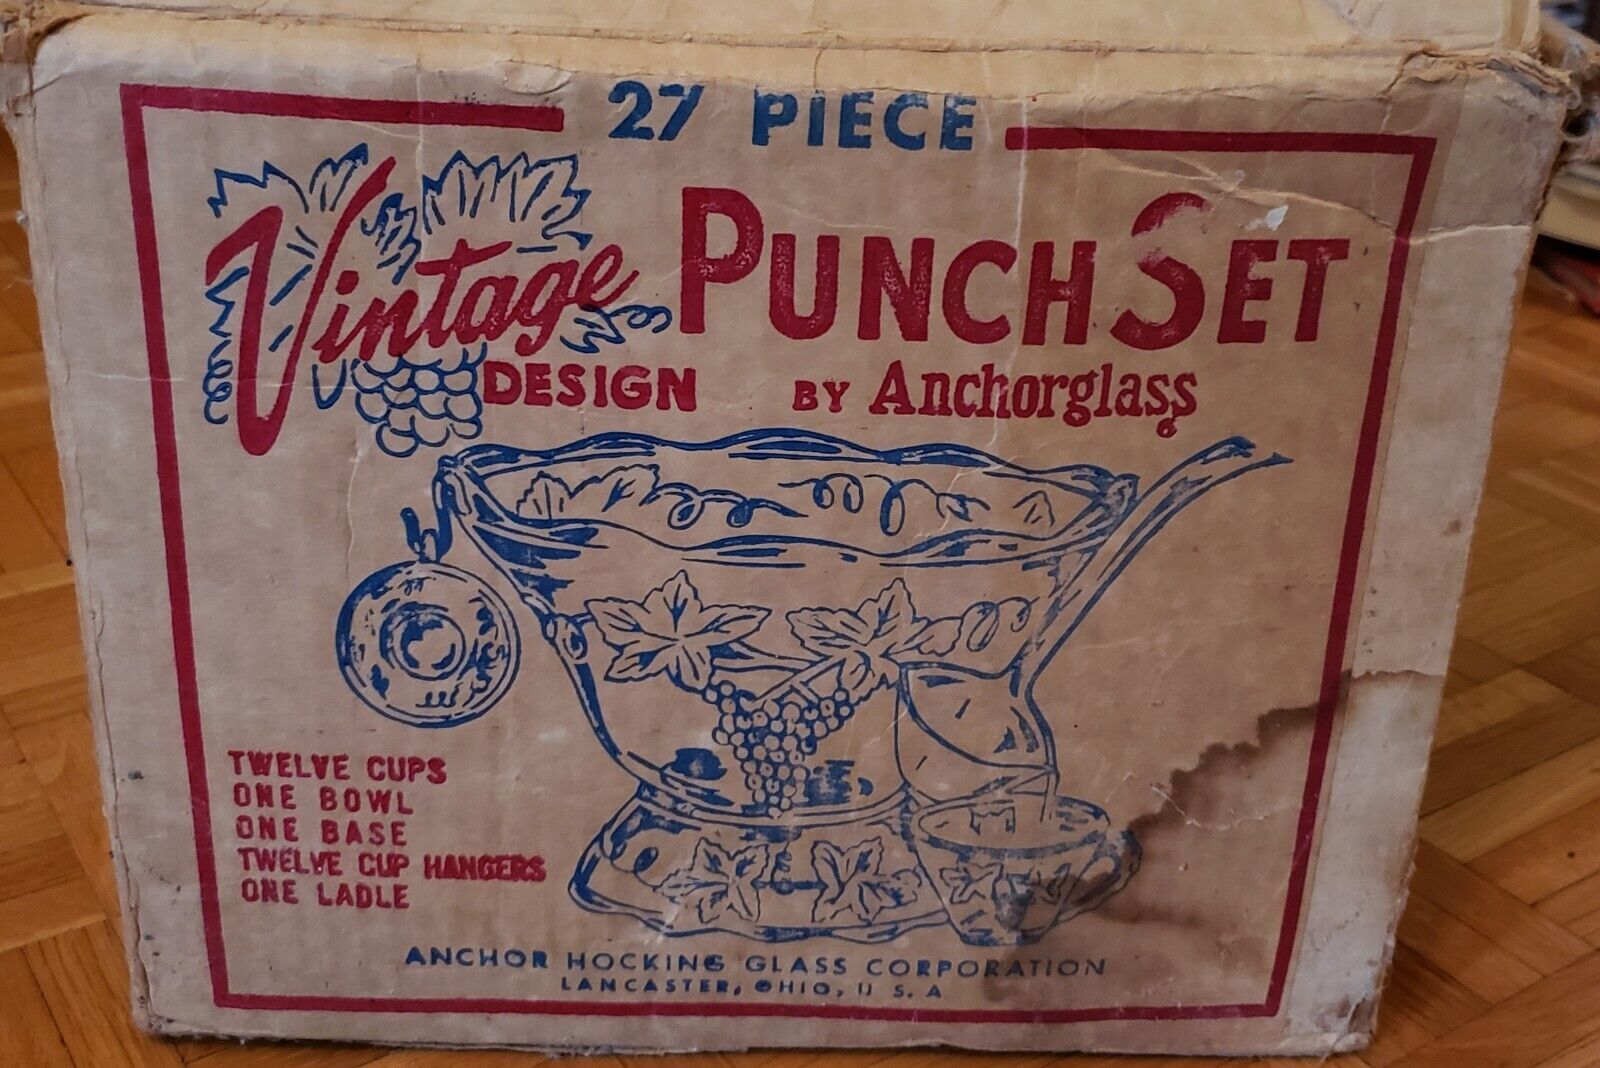 VTG Anchor Hocking Punch Bowl Set 12 Cups Anchorglass Set W Original Box Lot 27 